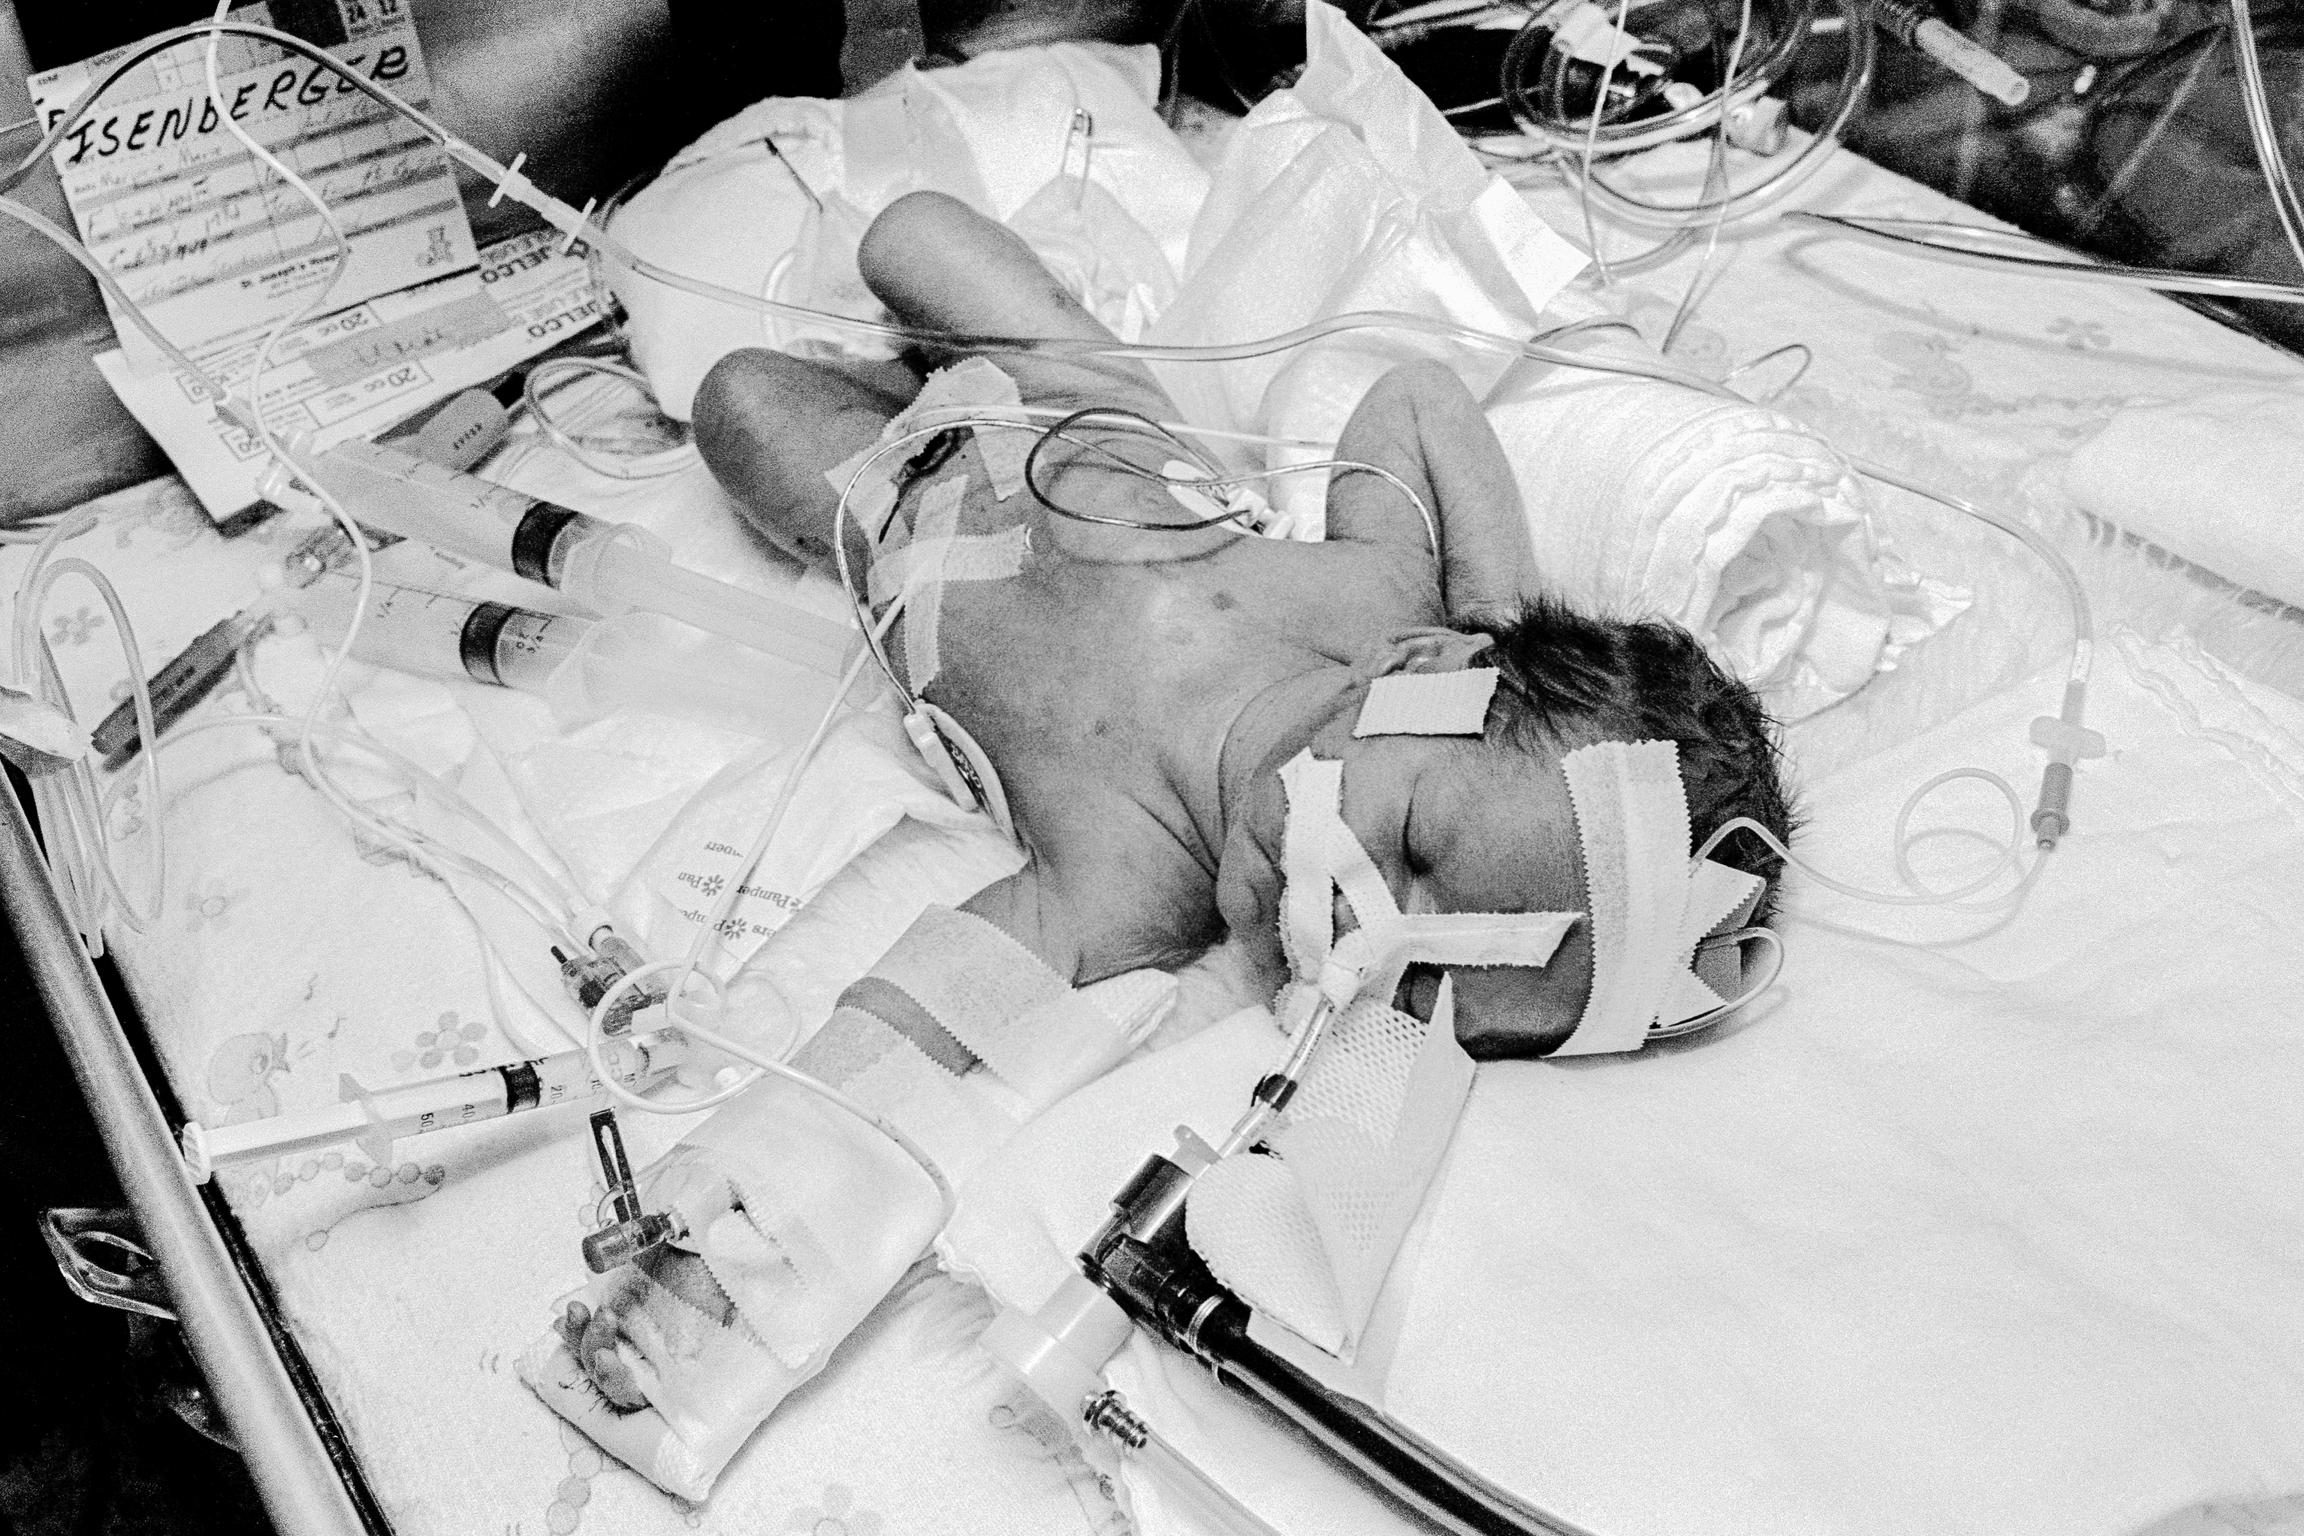 Preemie Baby unit at St Joseph's Hospital. I.C.U. Center. Showing endo-tracteal tube, umbilical catheter, electrode, and temperature probe. Phoenix, Arizona USA